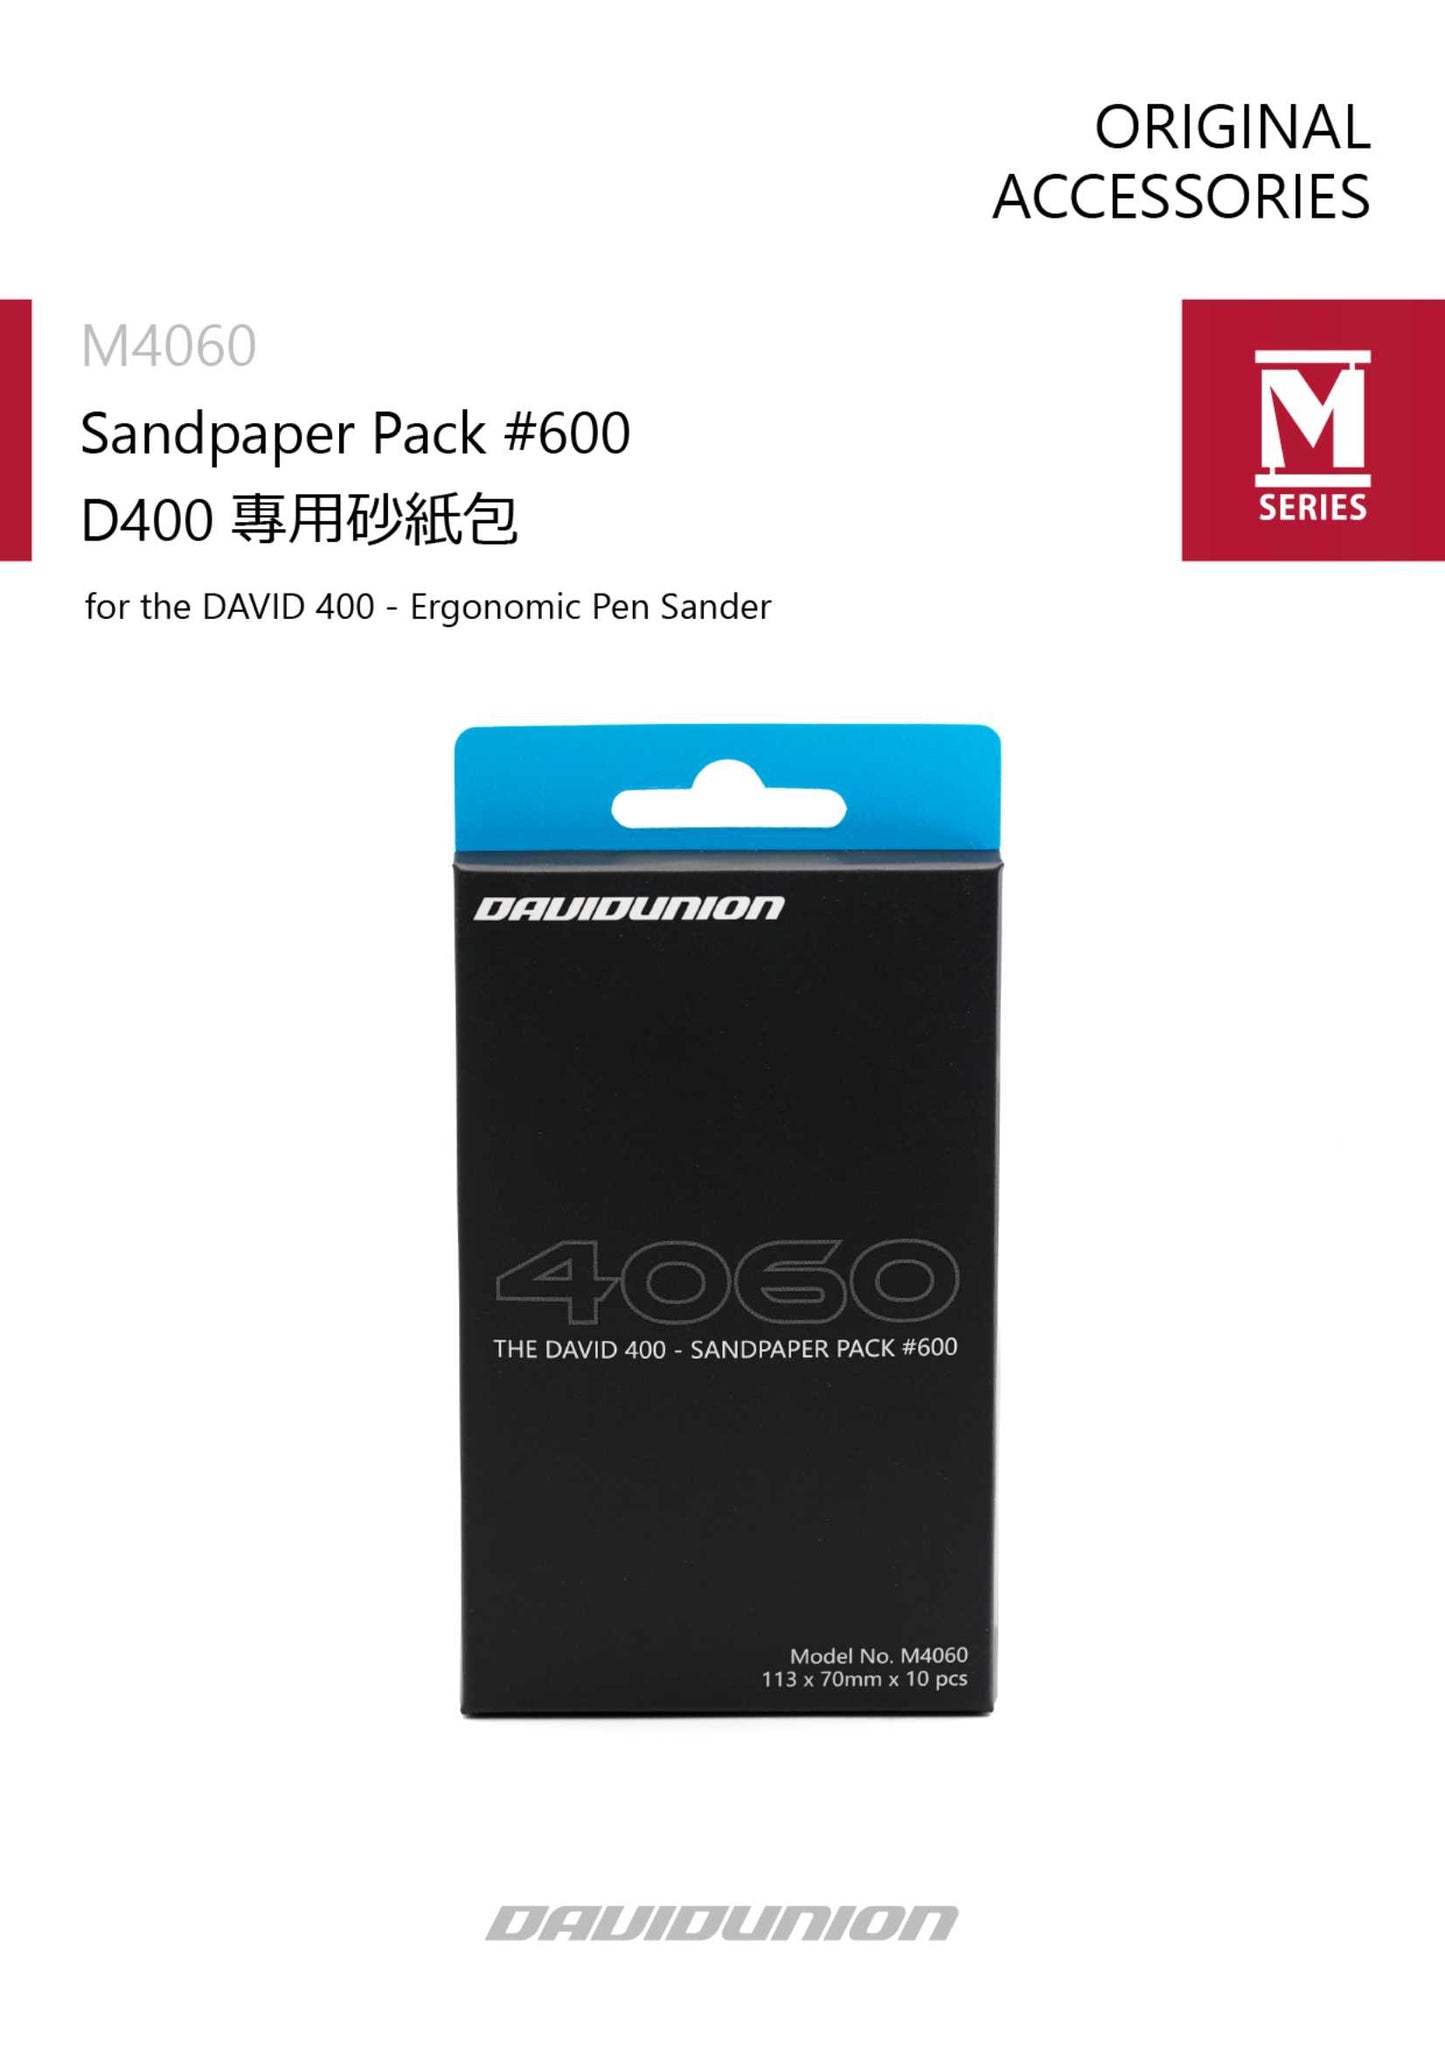 DAVIDUNION M4060 SANDPAPER PACK #600